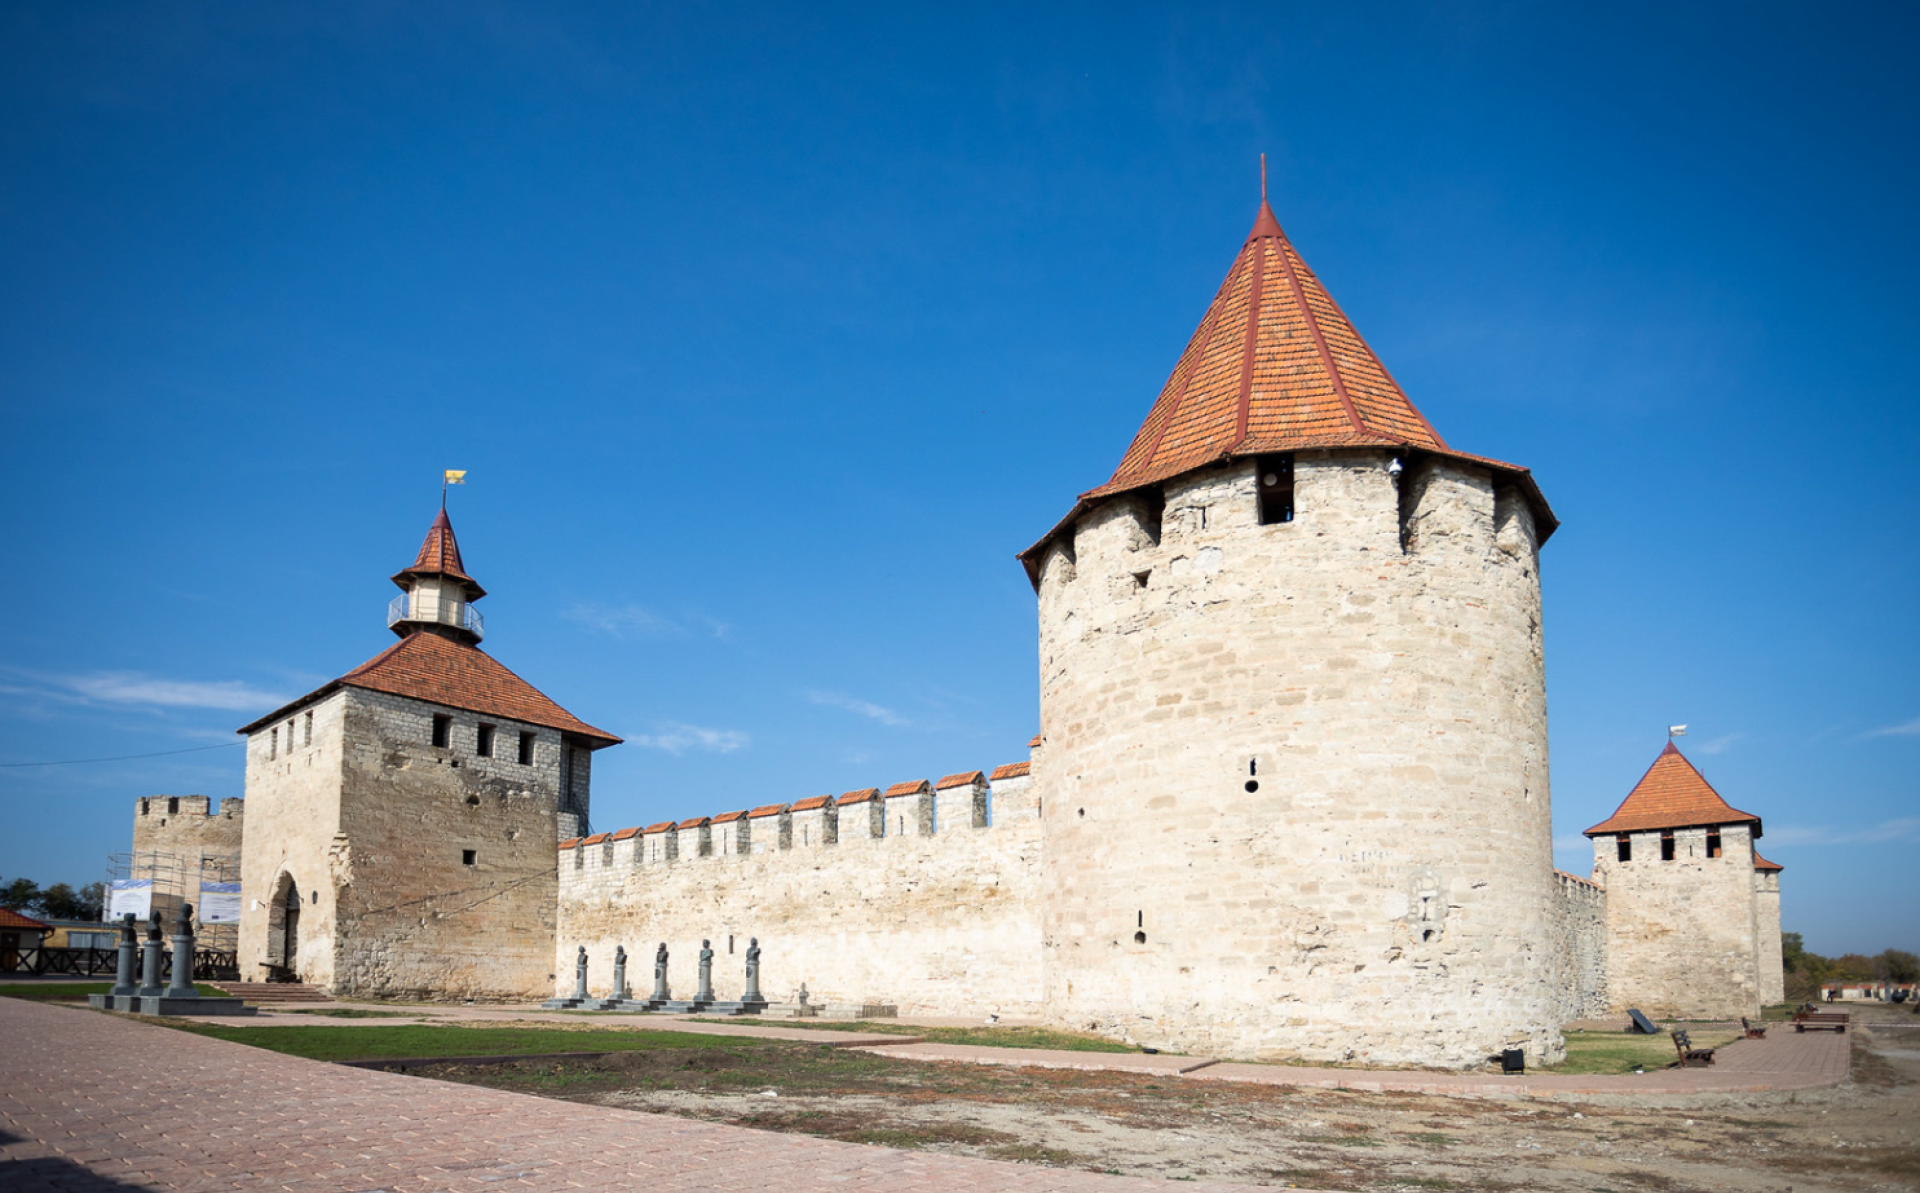 Moldova: EU provides over €1.4 million for restoration of fortress